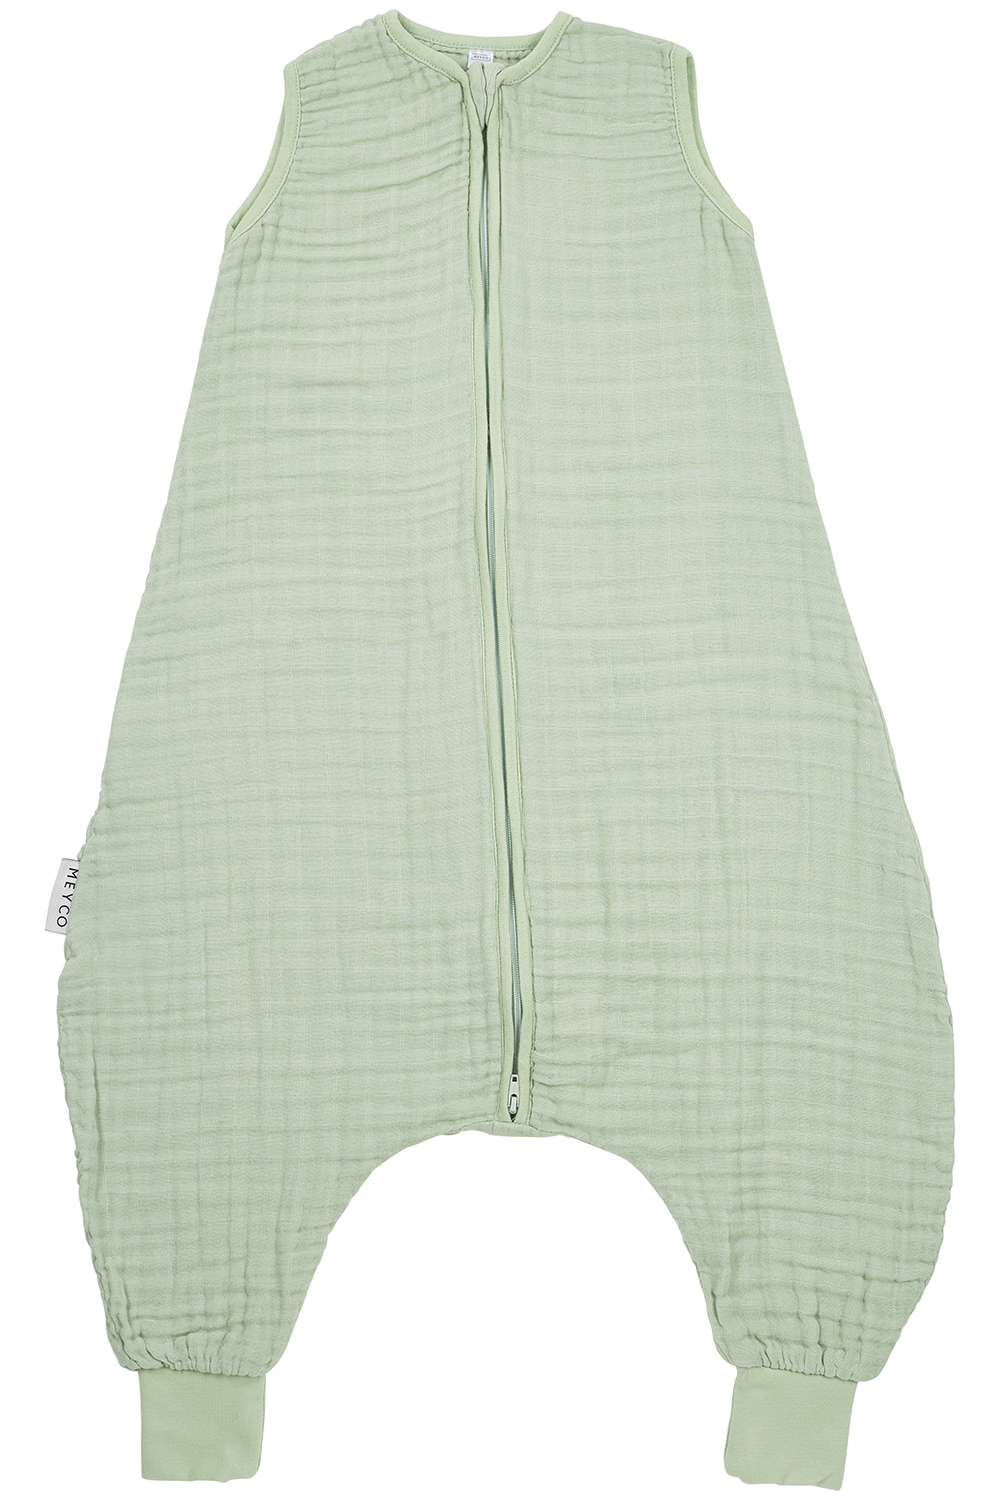 Baby zomer slaapoverall jumper pre-washed hydrofiel Uni - soft green - 104cm